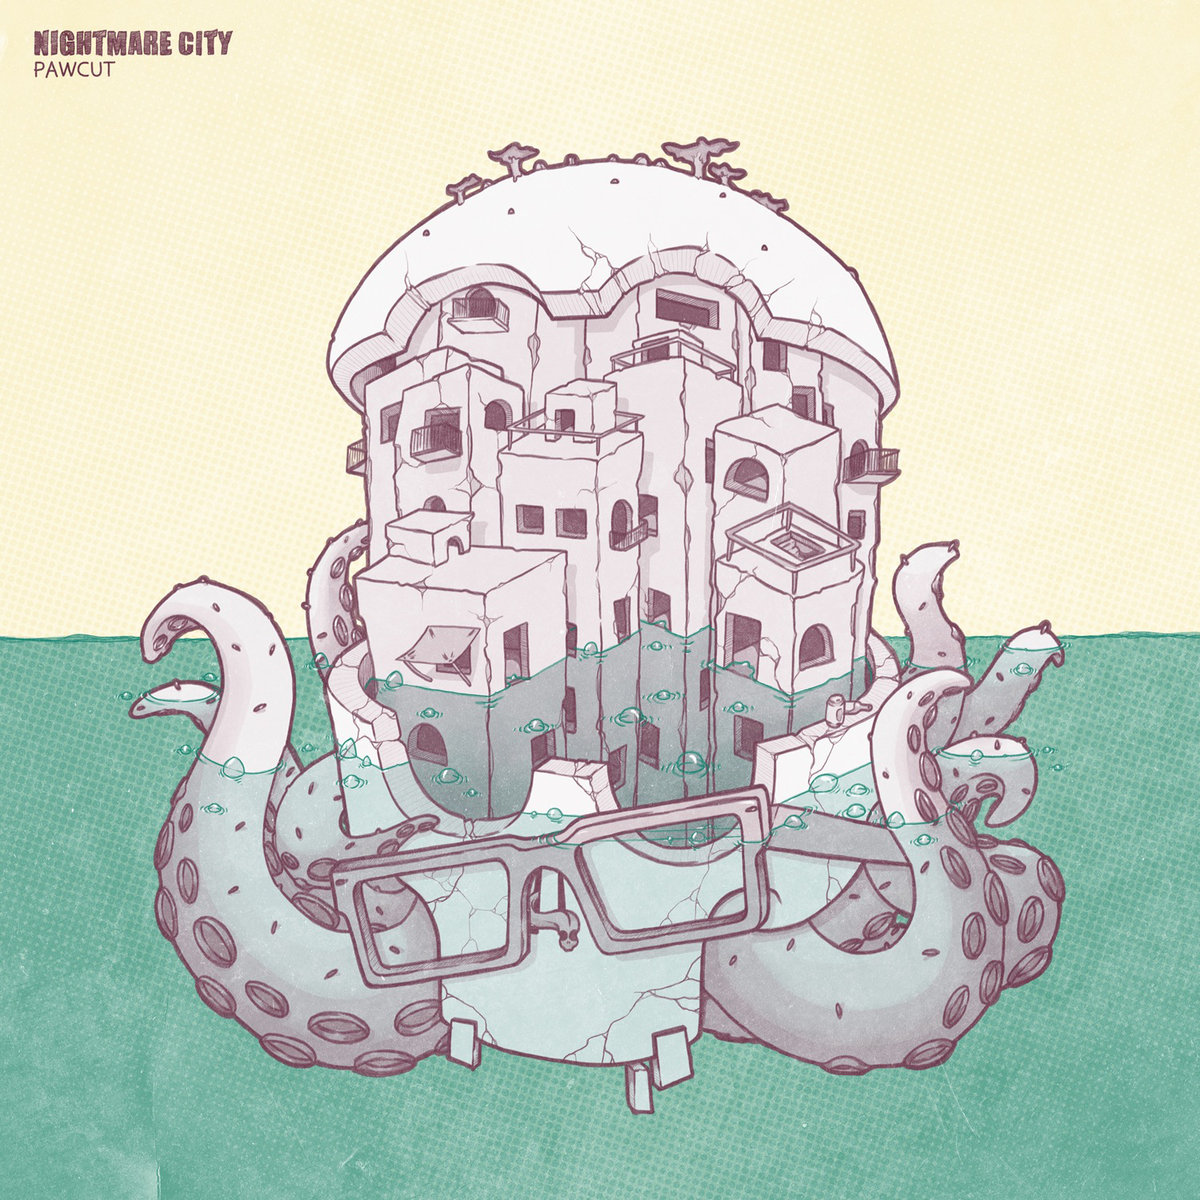 Pawcut - "Nightmare City" (Release)